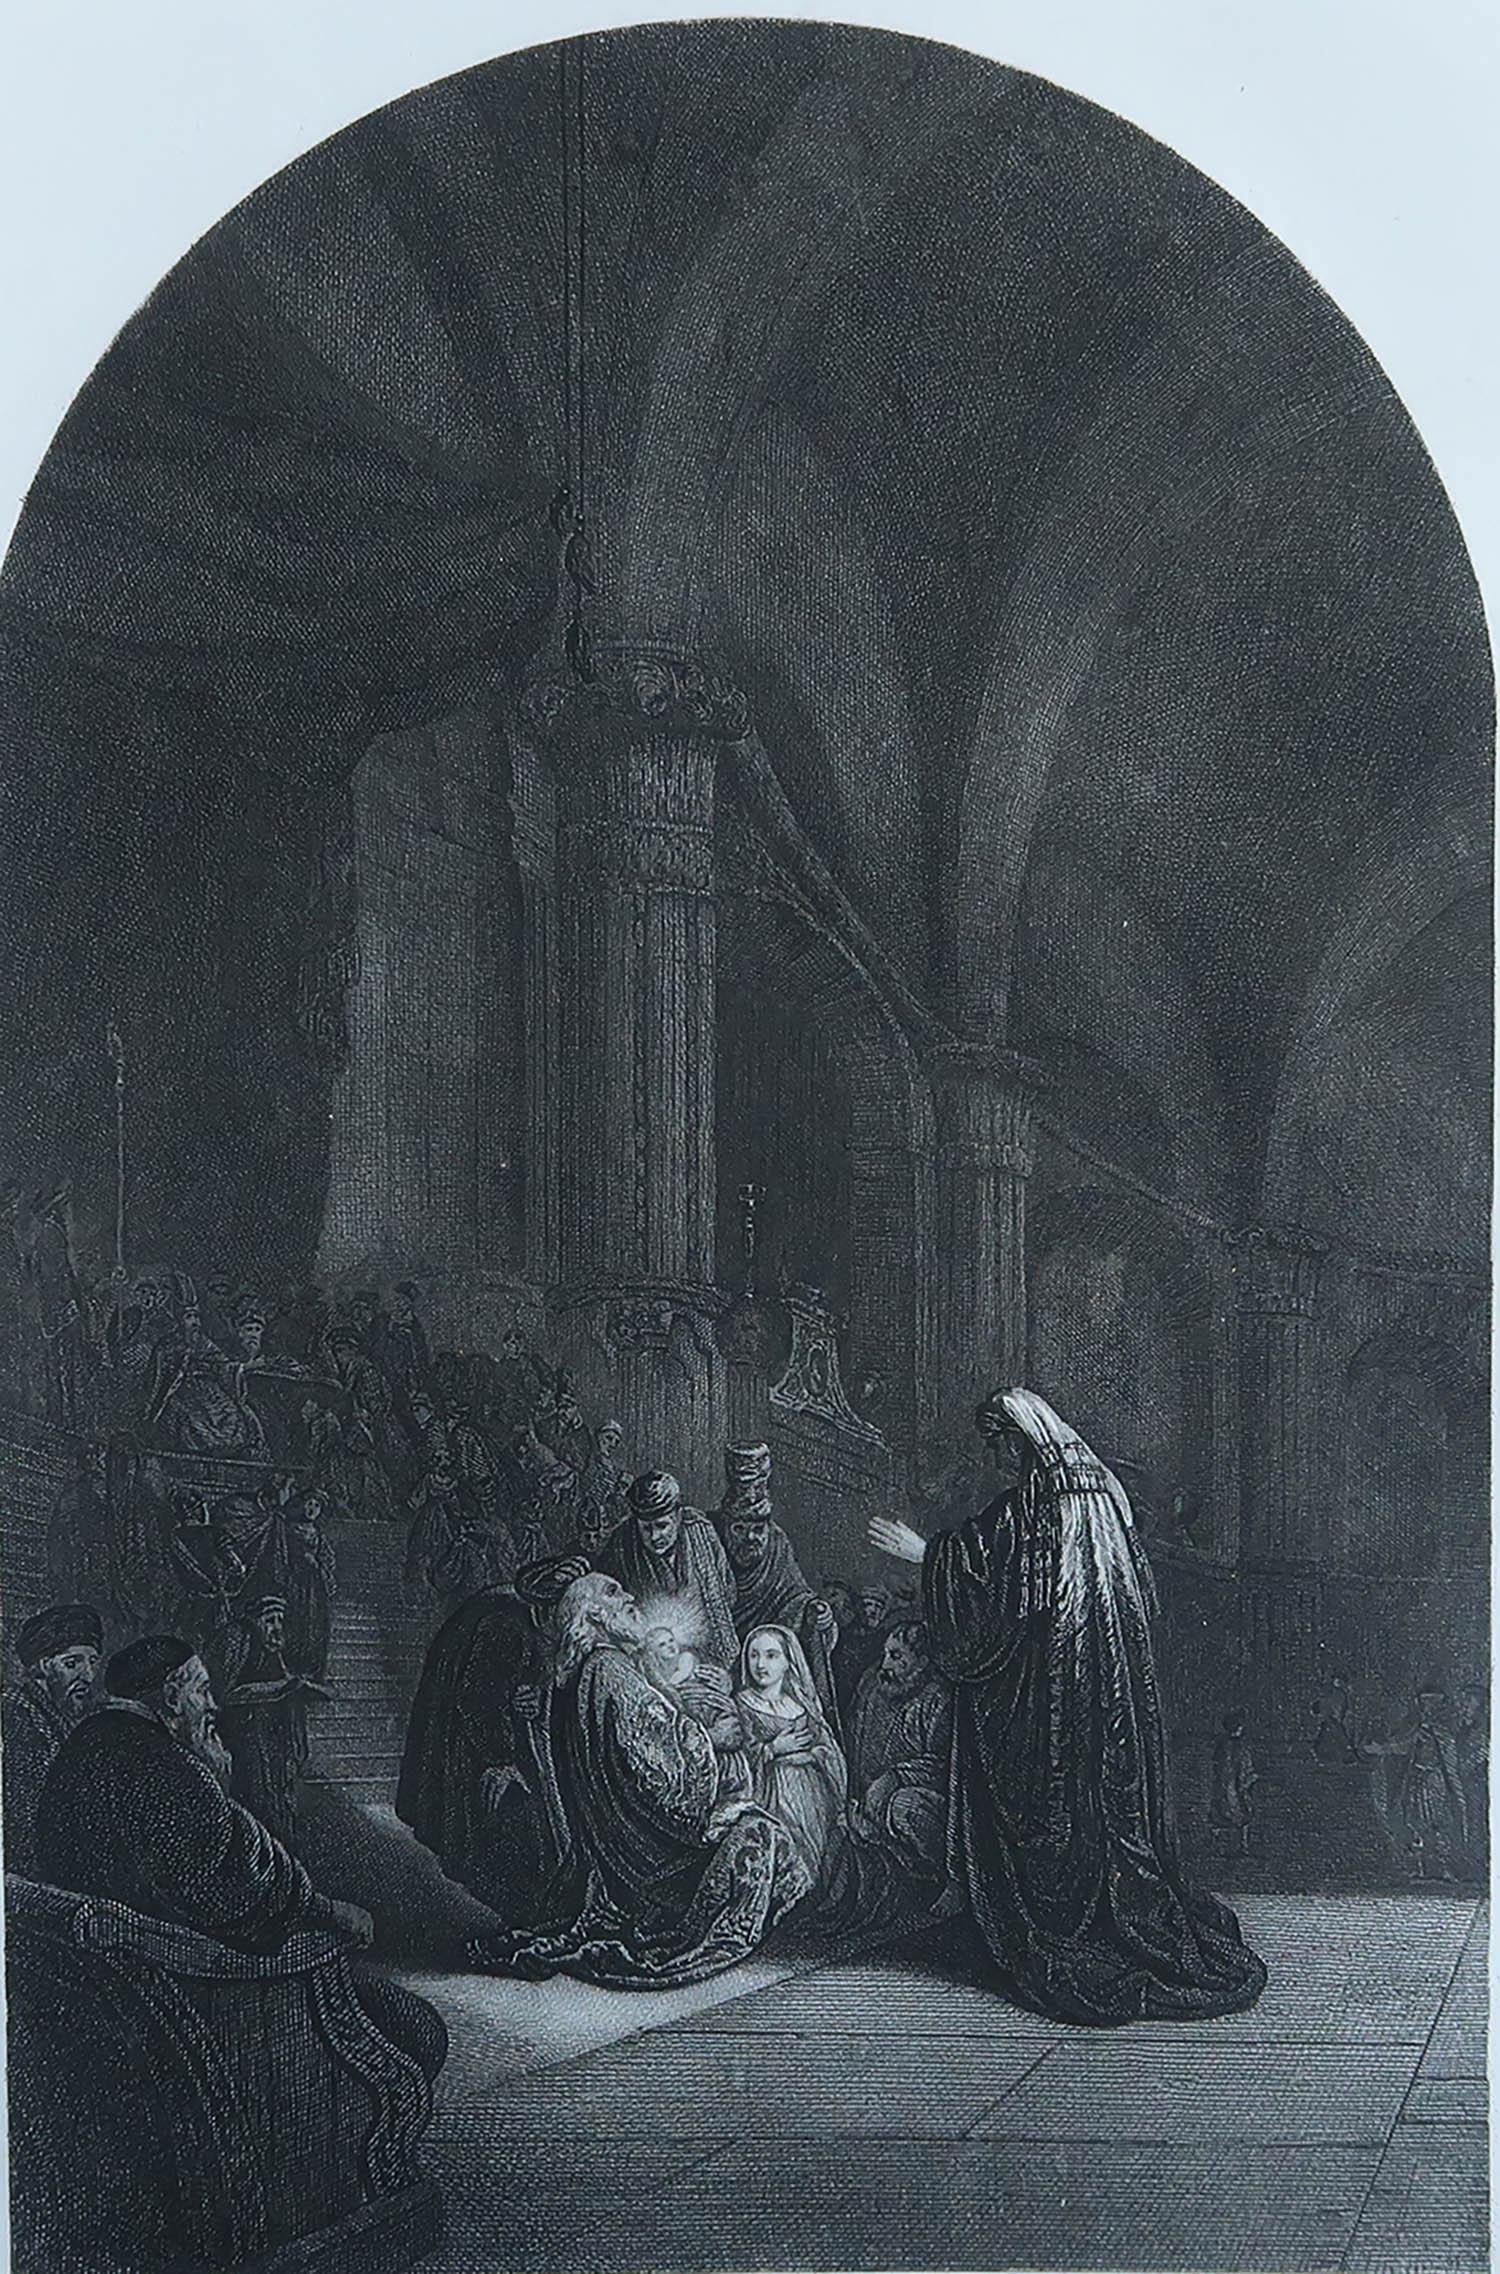 Wonderful image after Rembrandt

Fine Steel engraving. 

Published by Blackie & Sons London. C.1850

Unframed.

